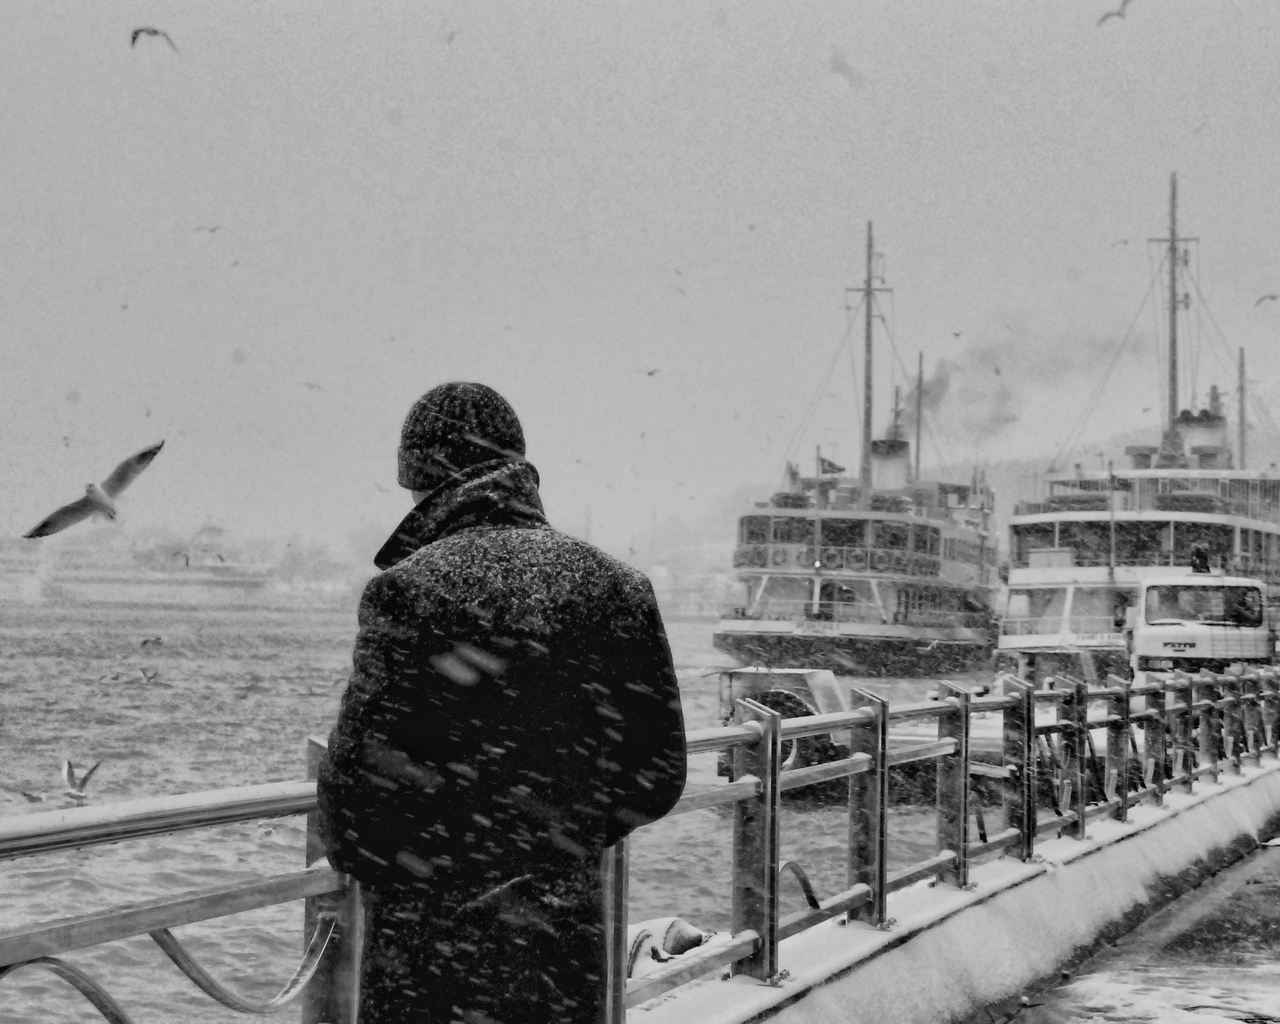 Image: Guy, man, sea, snow, winter, seagull, motor ship, ferry, port, black and white, sadness